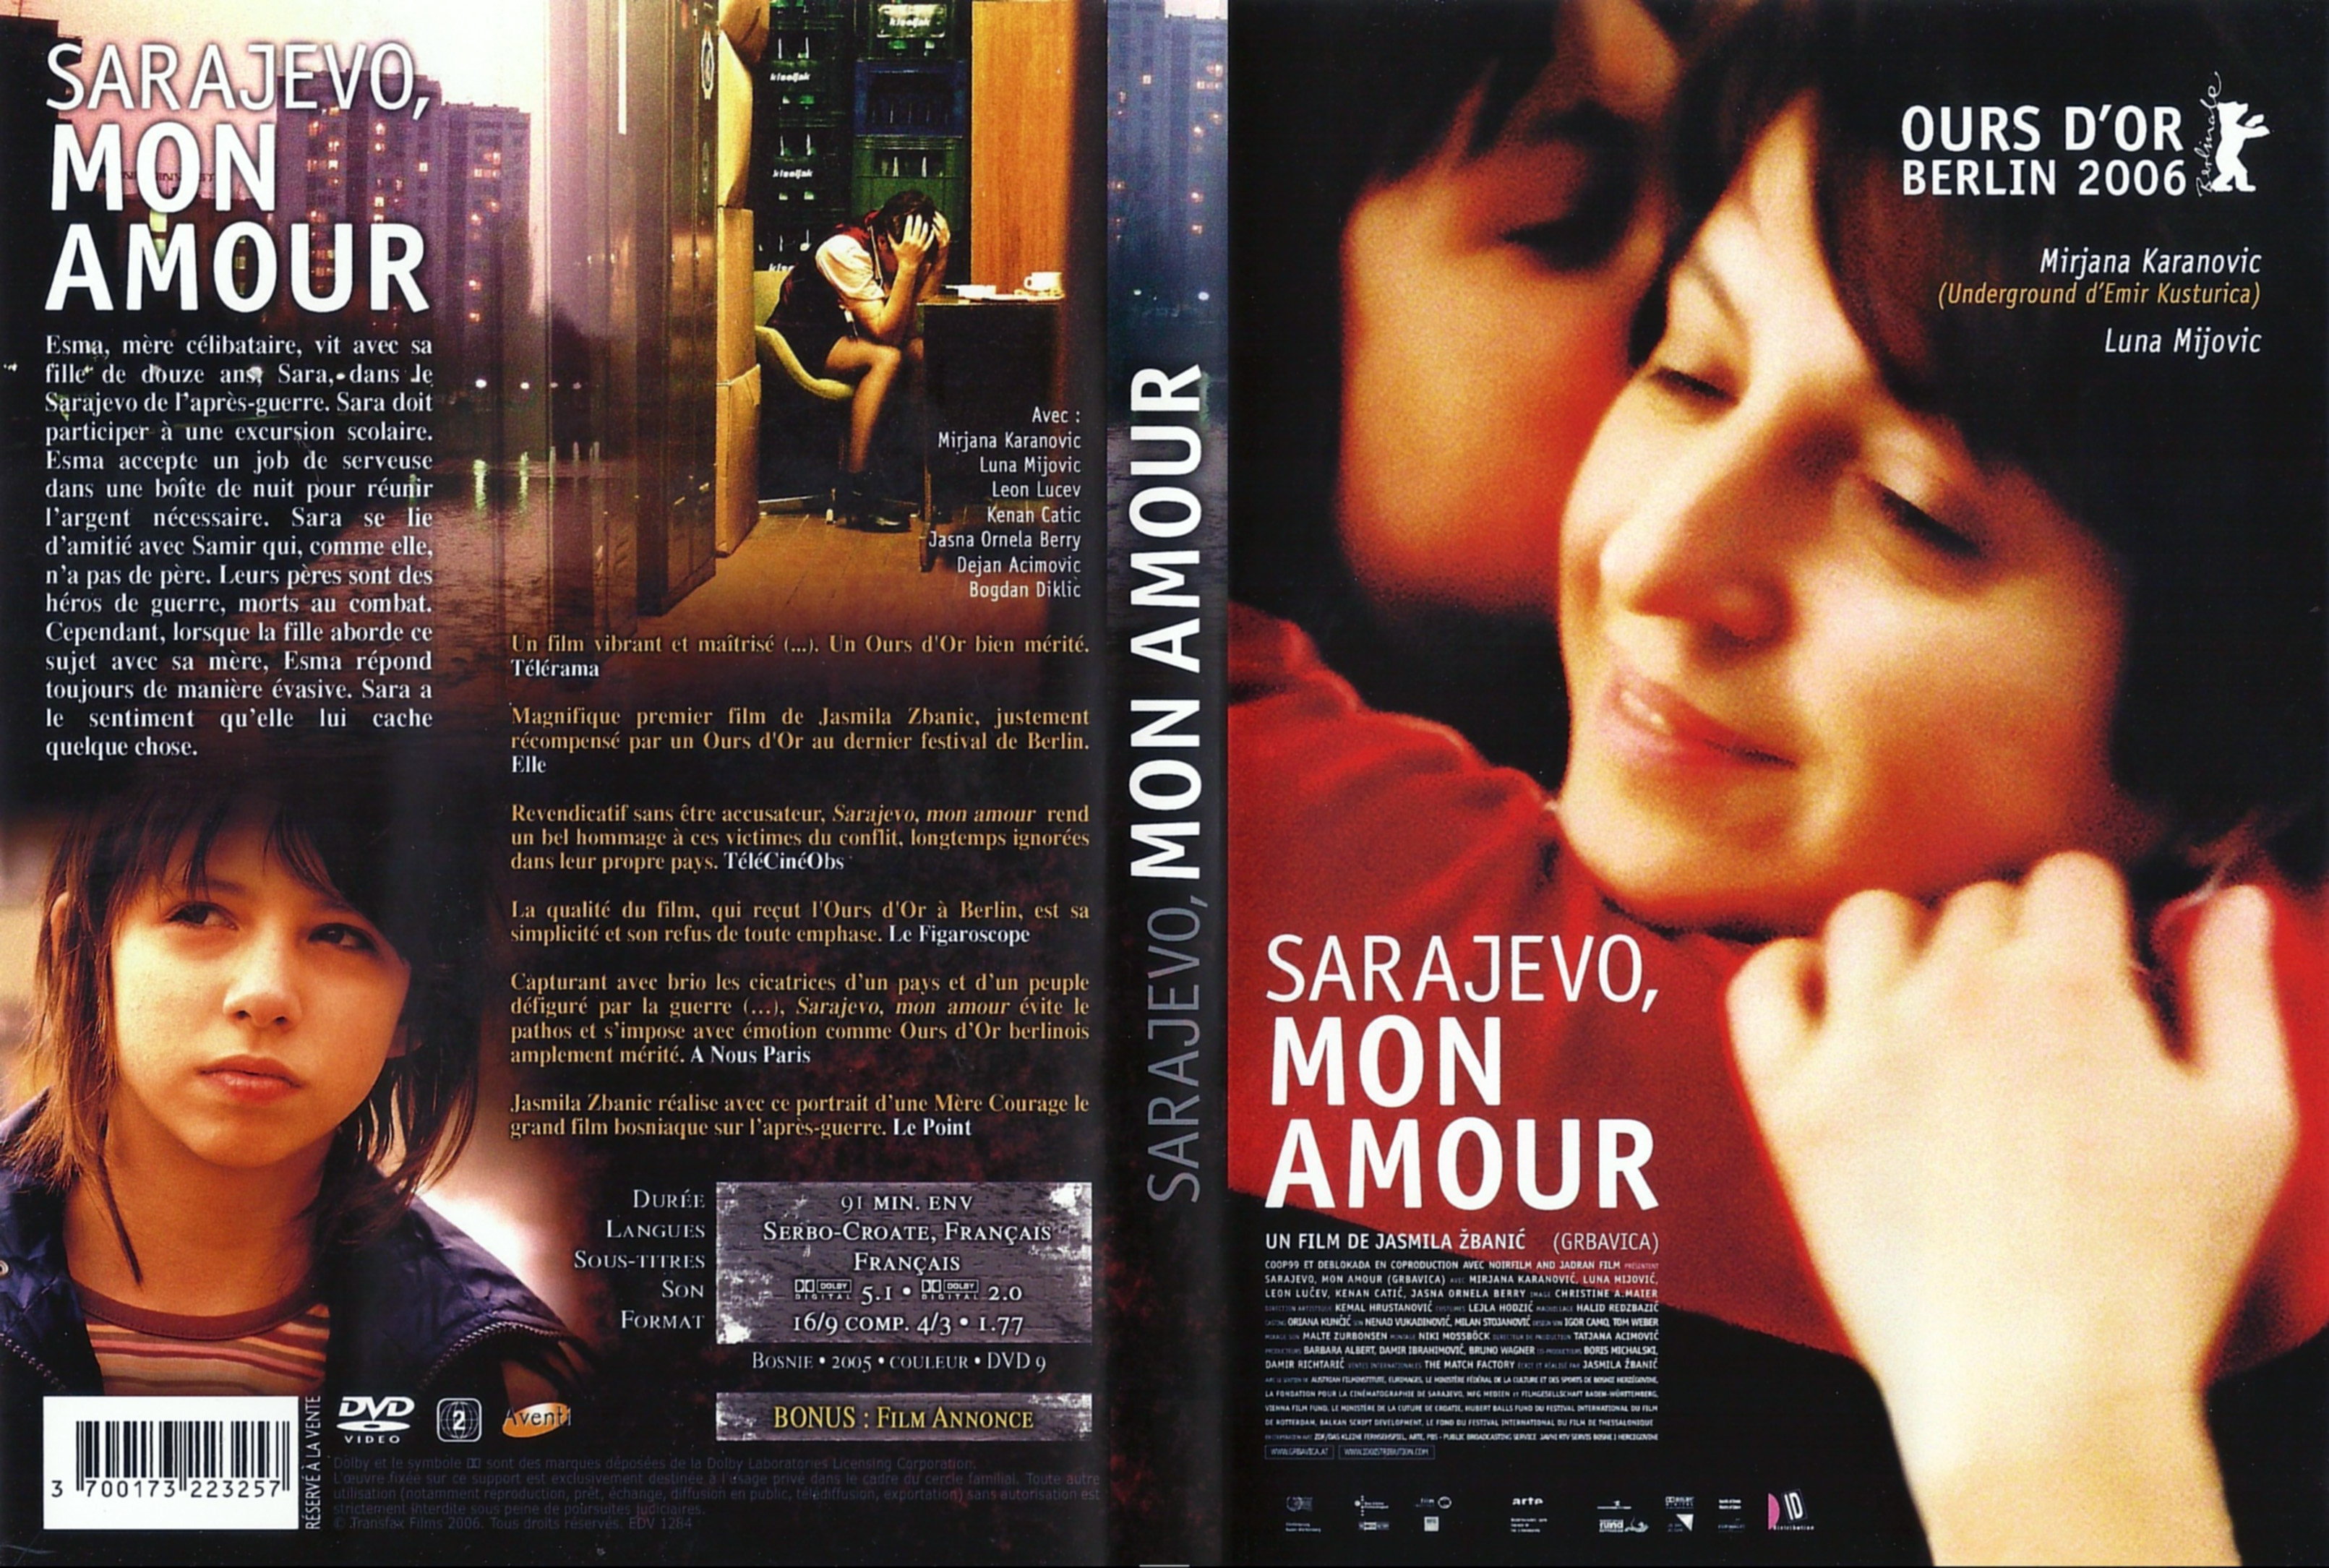 Jaquette DVD Sarajevo mon amour